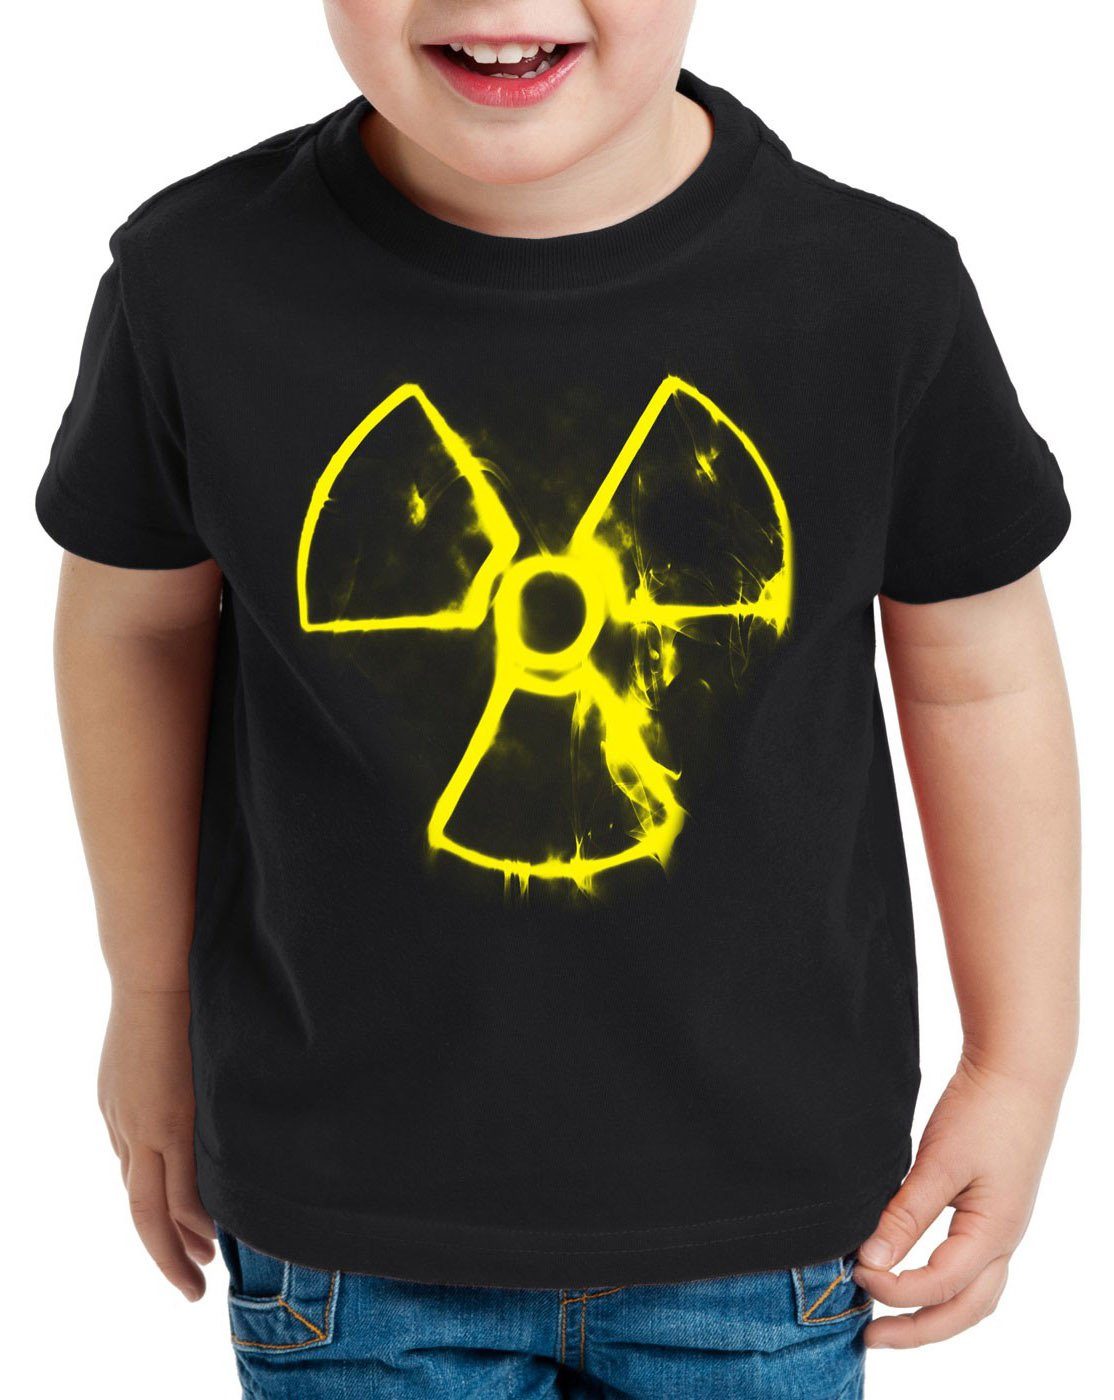 style3 Print-Shirt Kinder T-Shirt Nuclear Smoke nein danke akw atomkraft